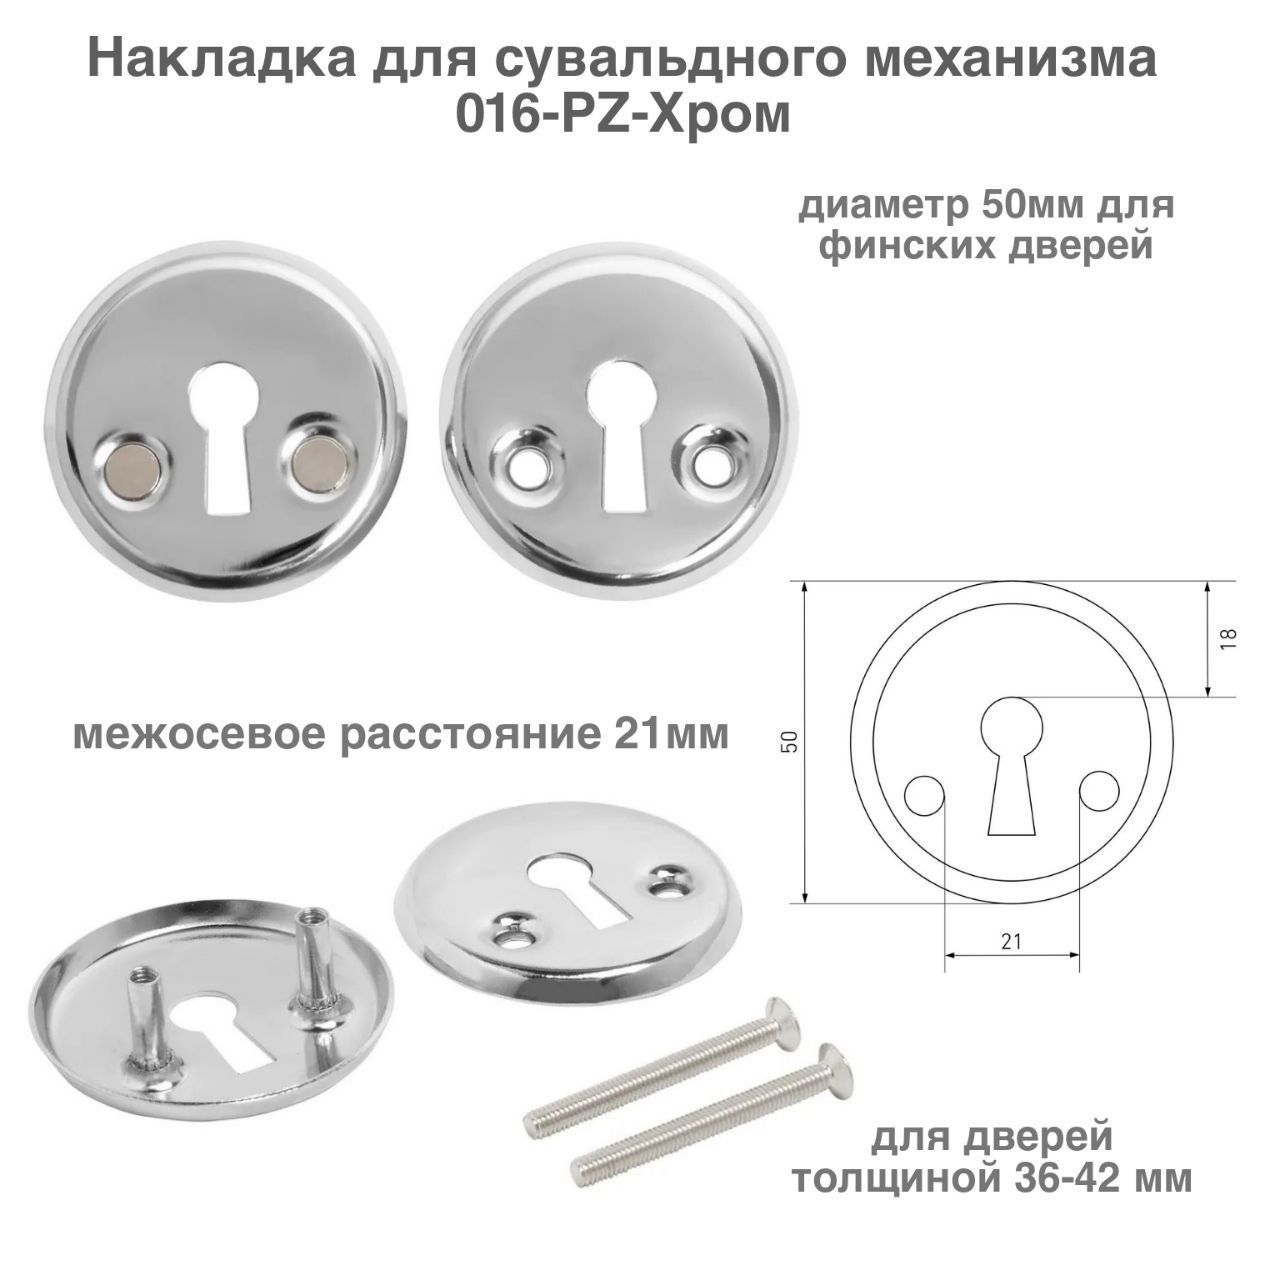 Накладка для сувальдного механизма диаметр 50мм 016-PZ-цвет хром